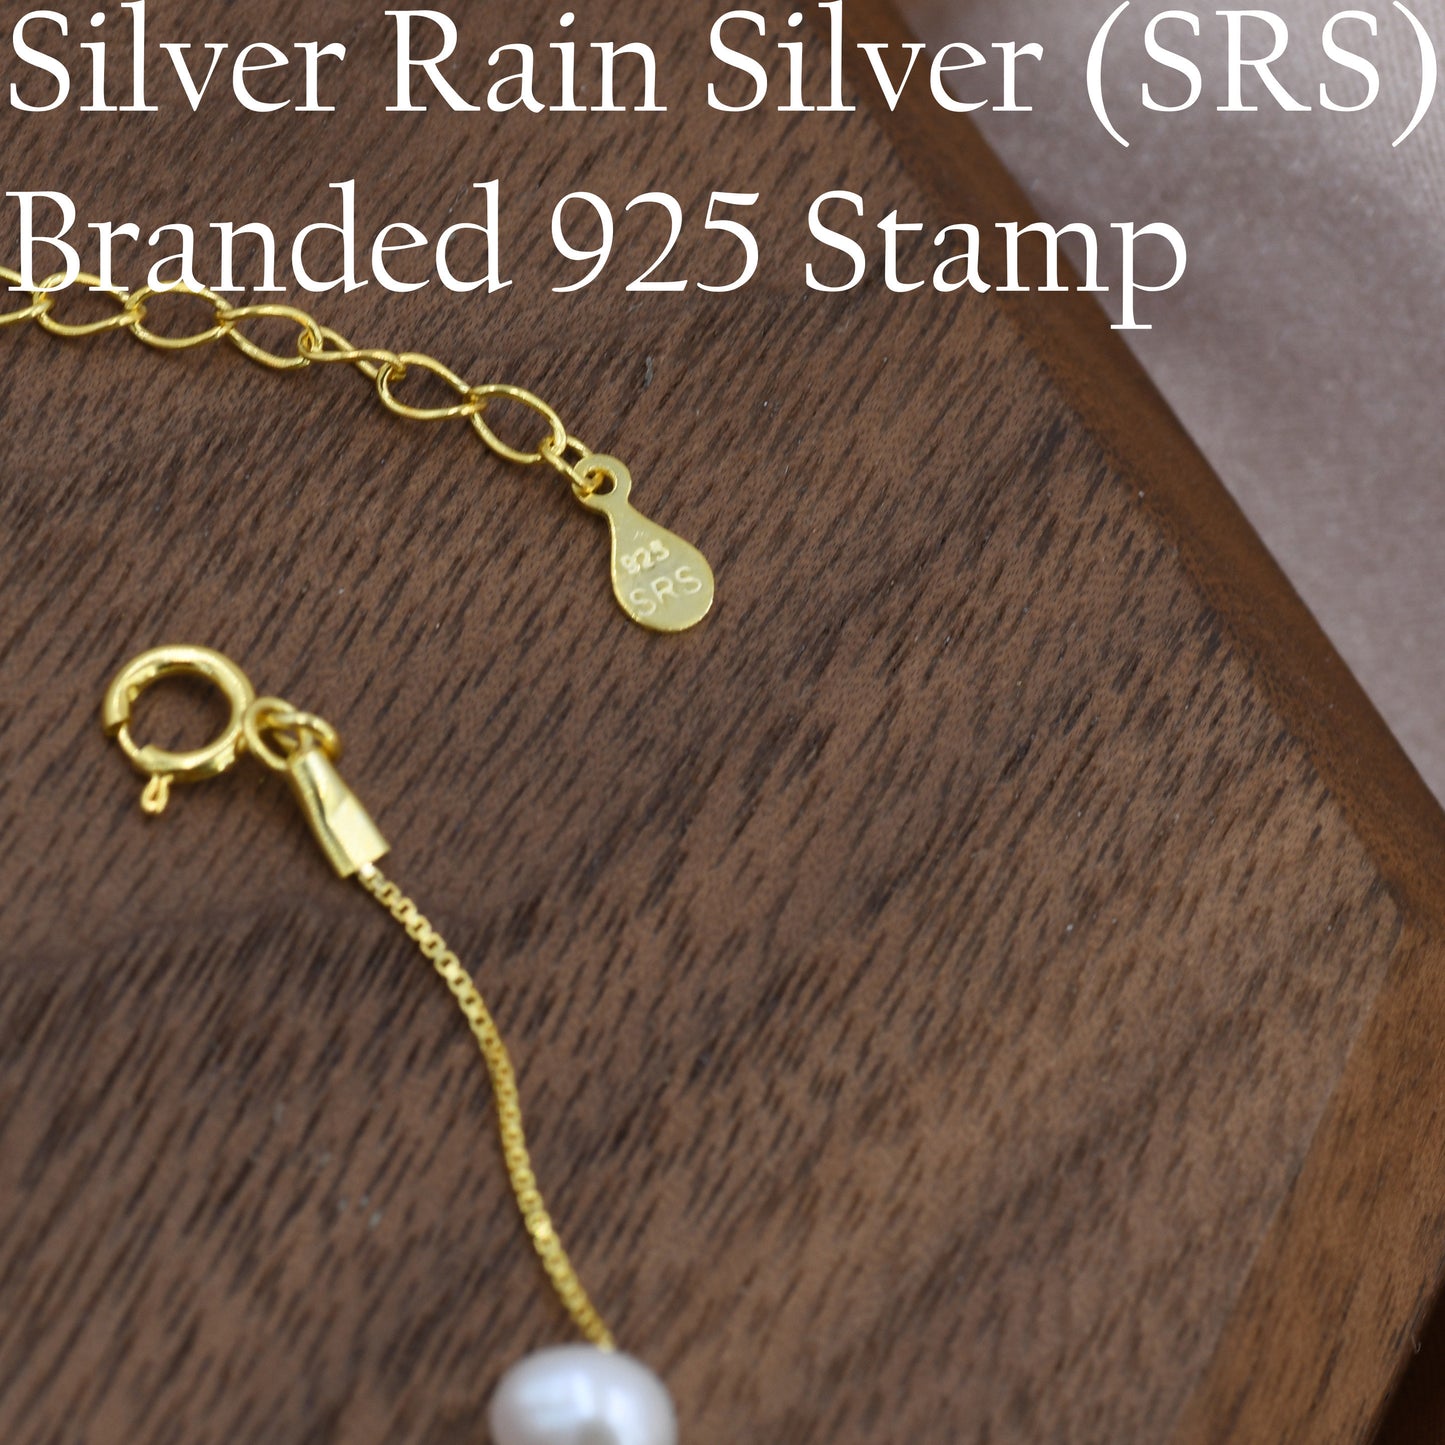 Sterling Silver Freshwater Pearl Bracelet, Silver or Gold, Genuine Fresh Water Pearls, Natural Pearl Bracelet, Ivory Pearls, Five Pearl